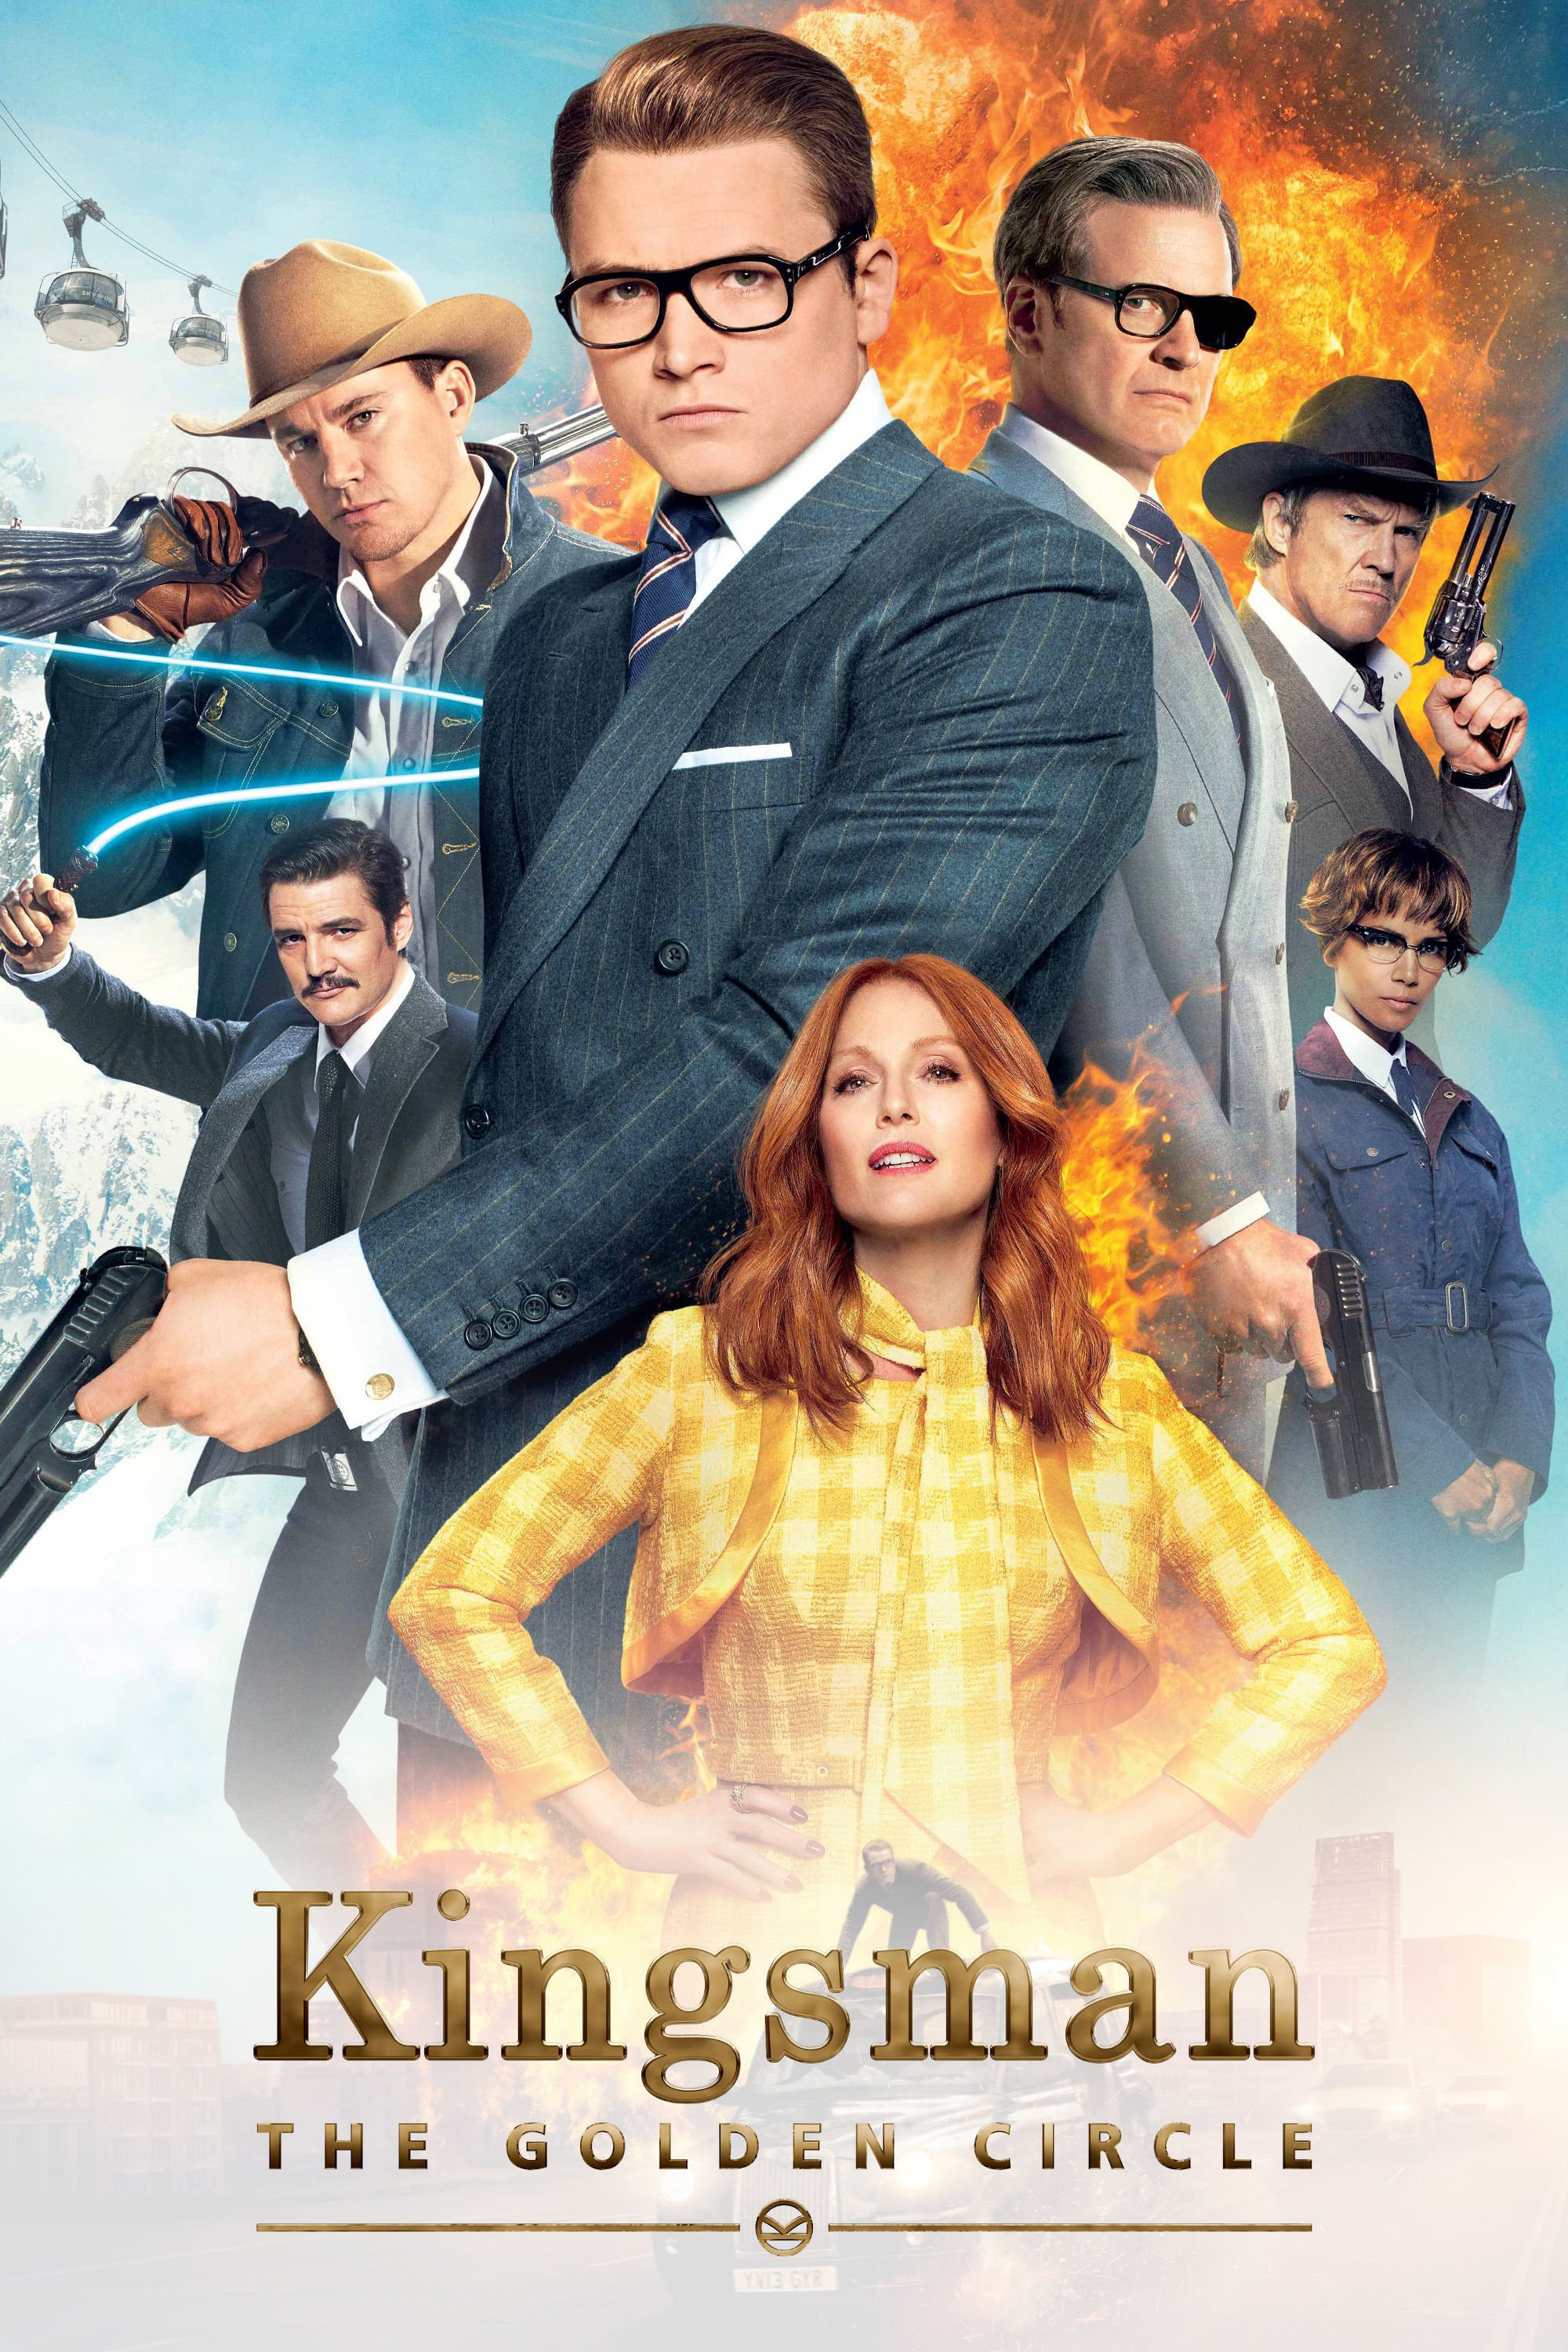 Plakat von "Kingsman: The Golden Circle"